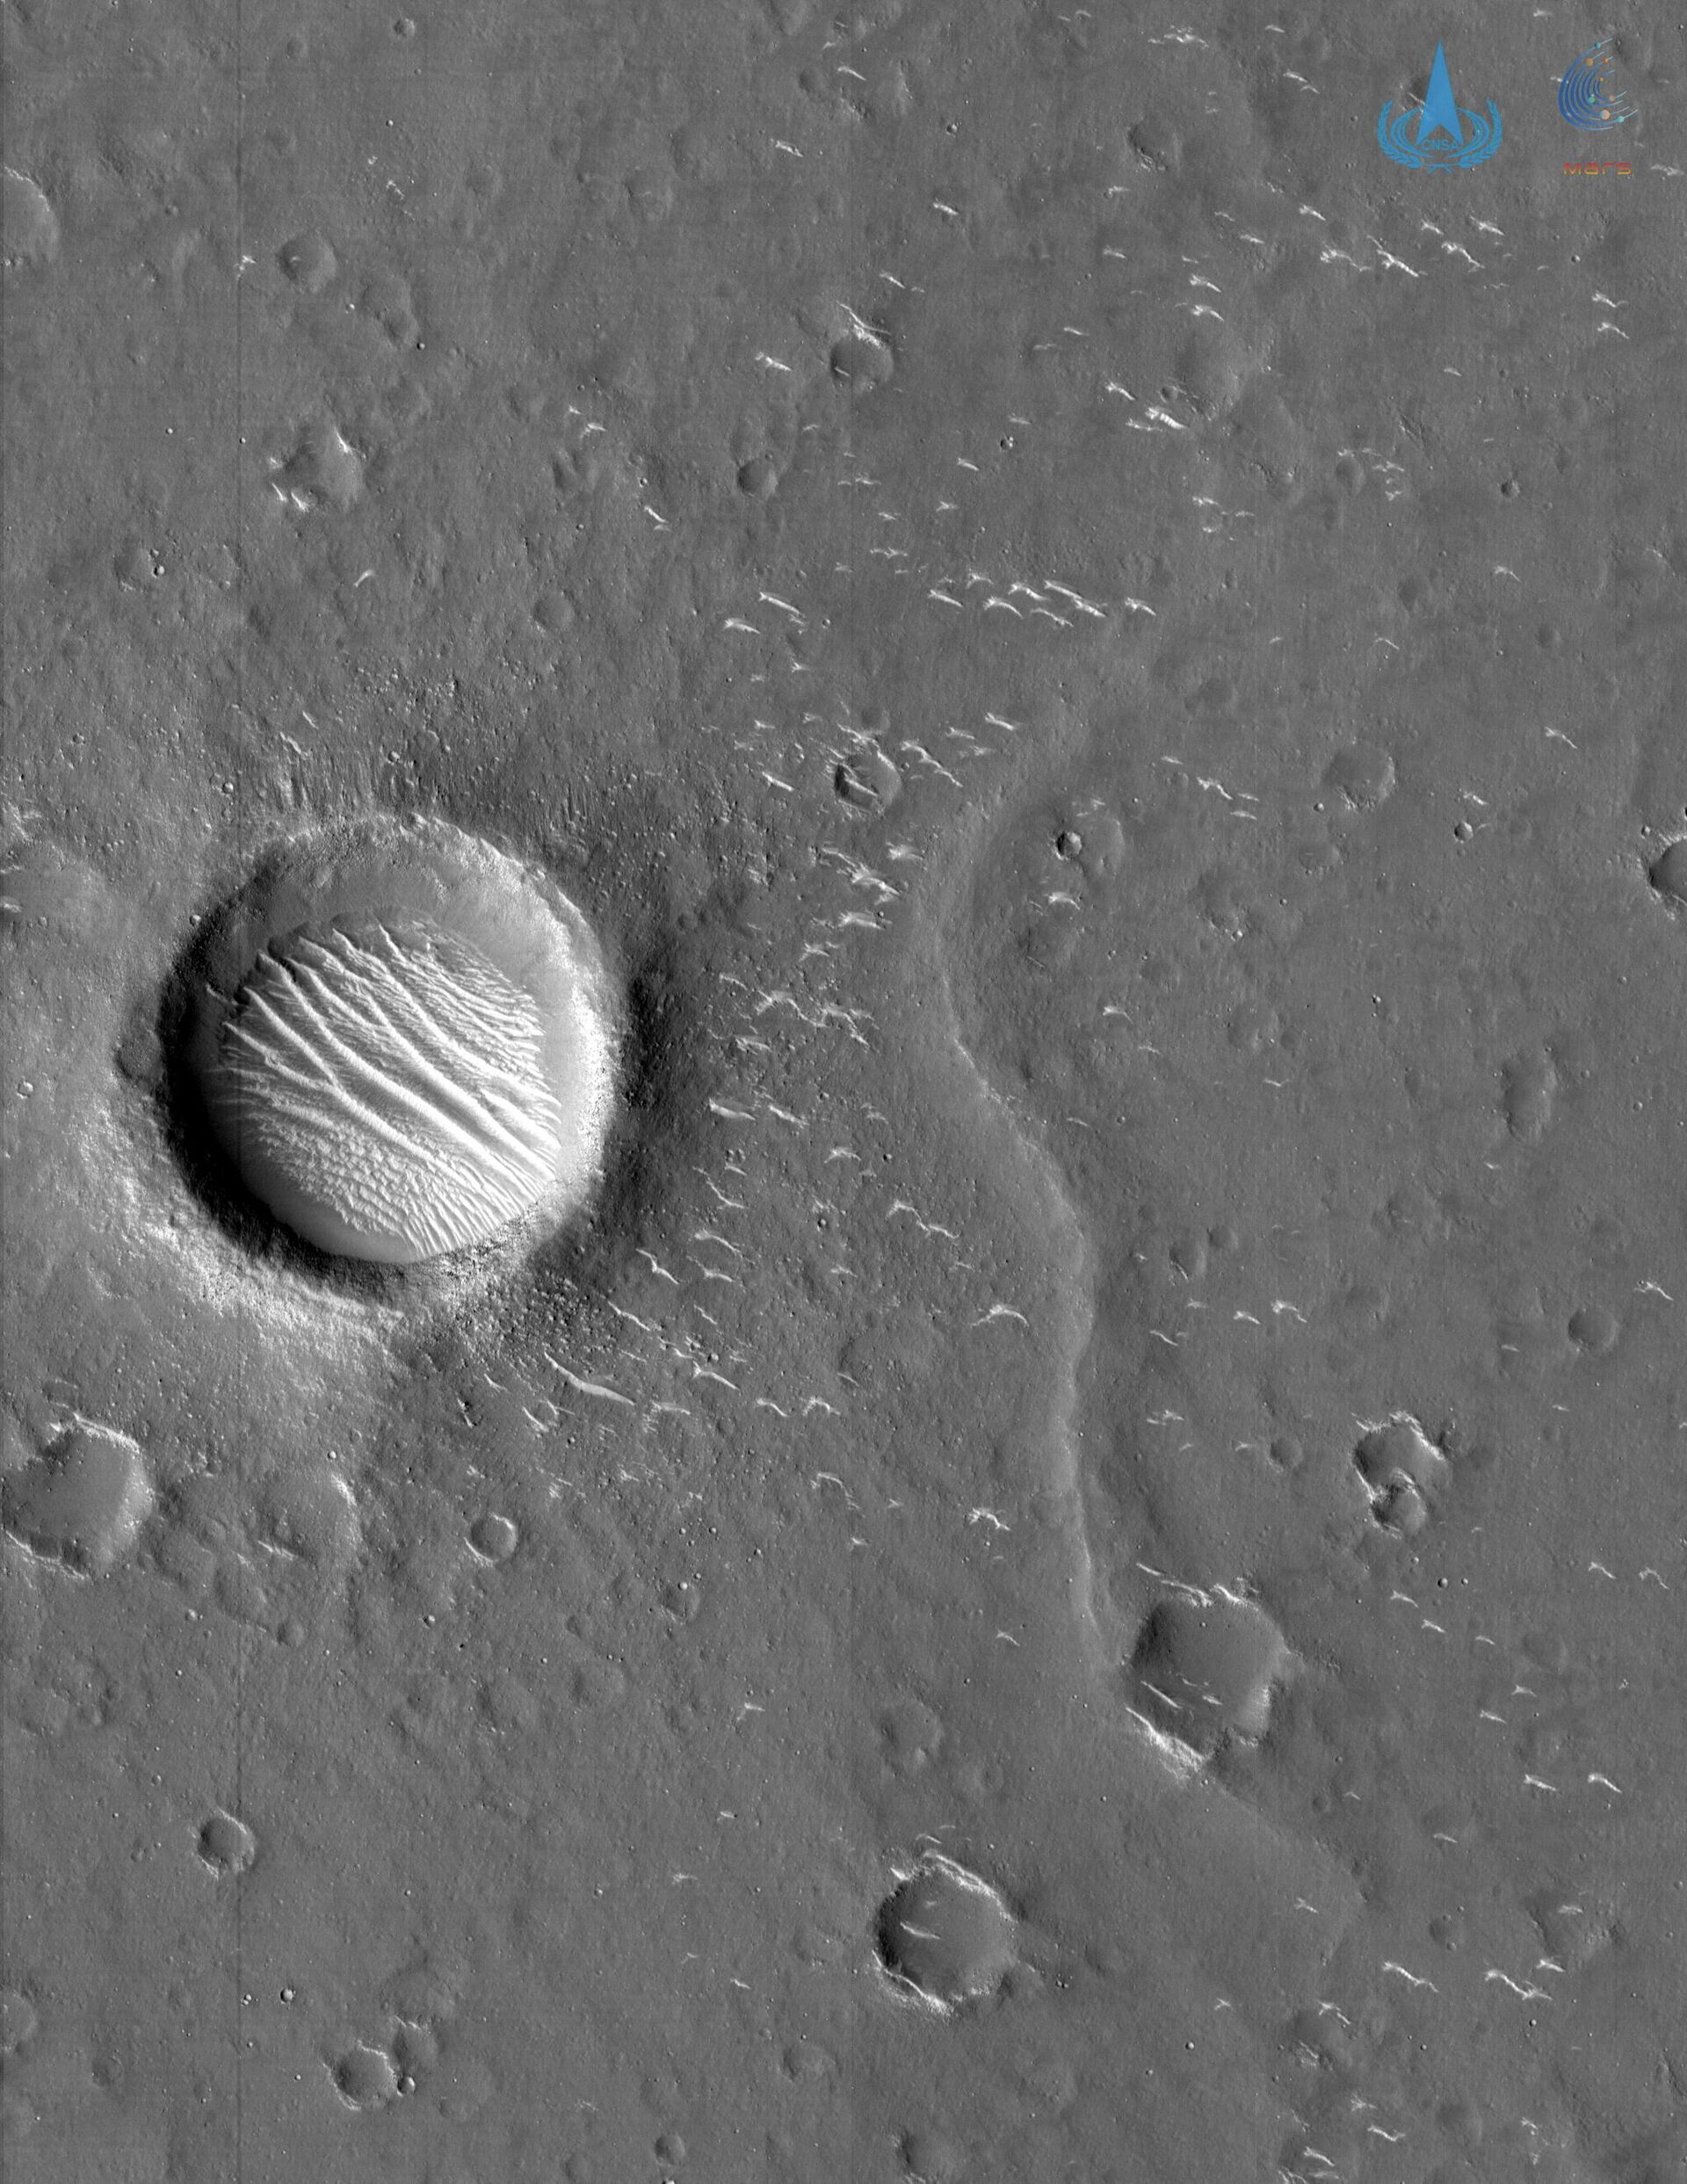 Marte fotografiado por la sonda espacial Tianwen 1 - Sputnik Mundo, 1920, 05.03.2021